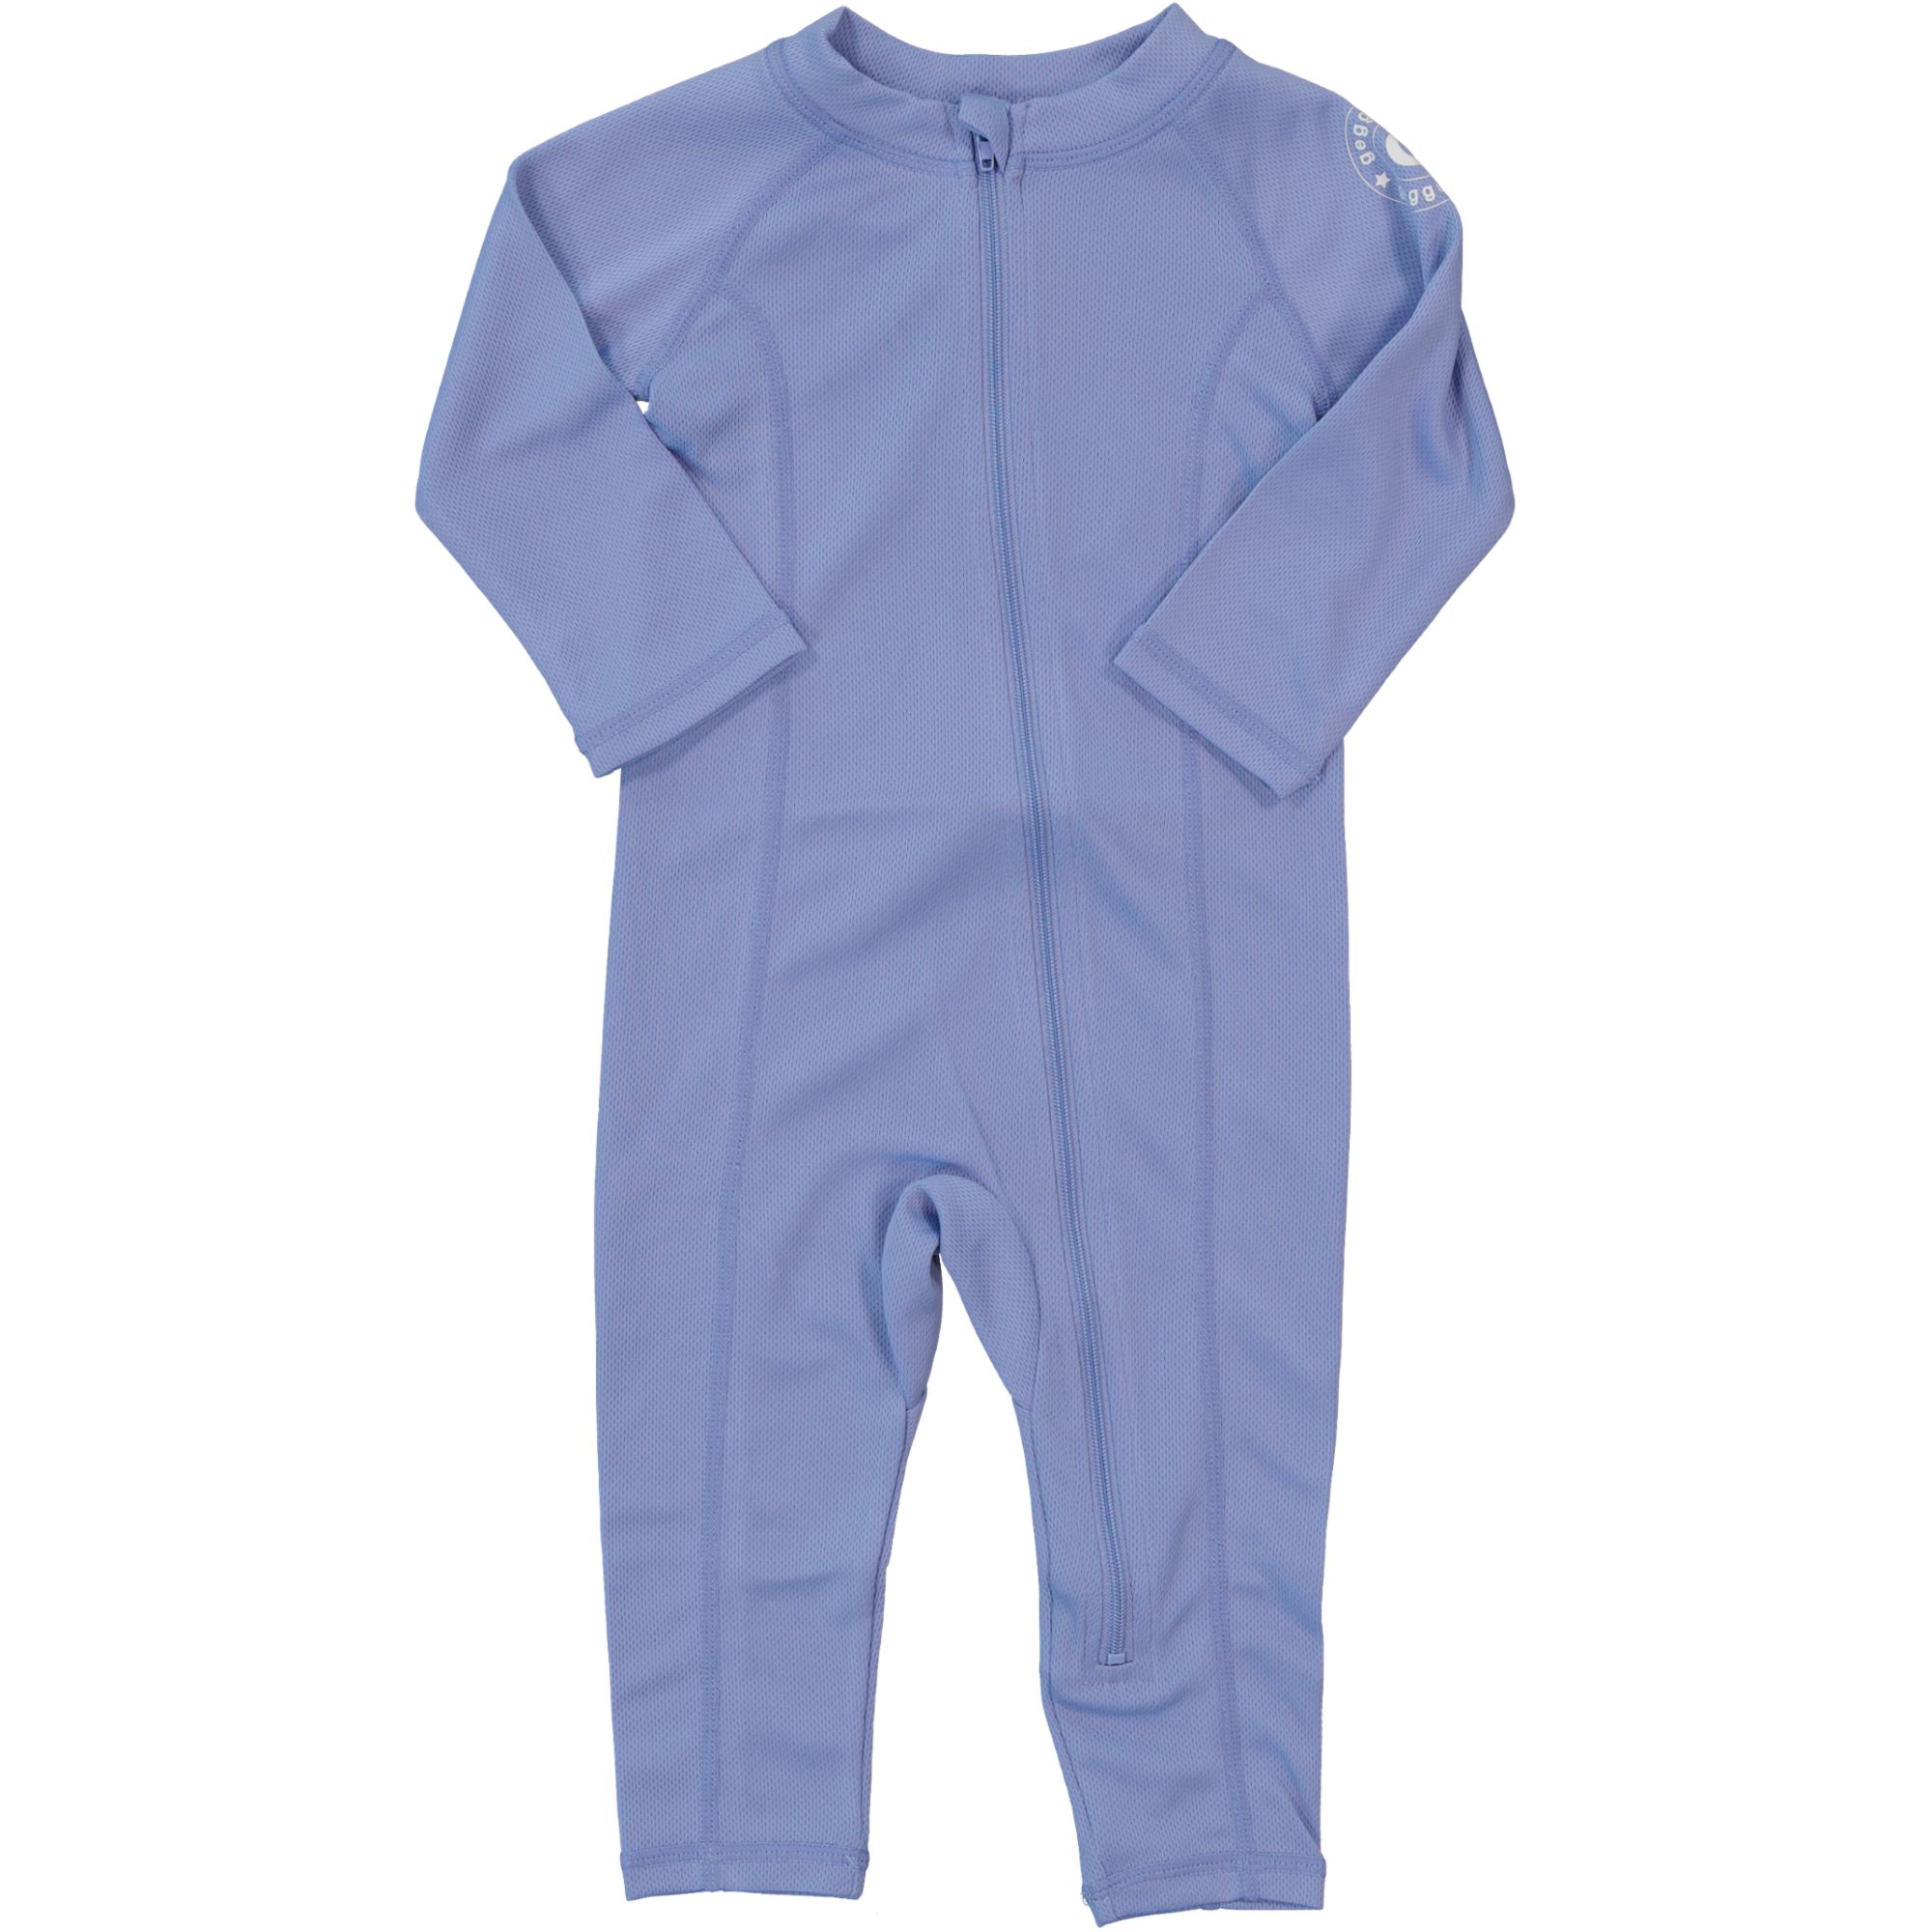 UV Baby suit Blue